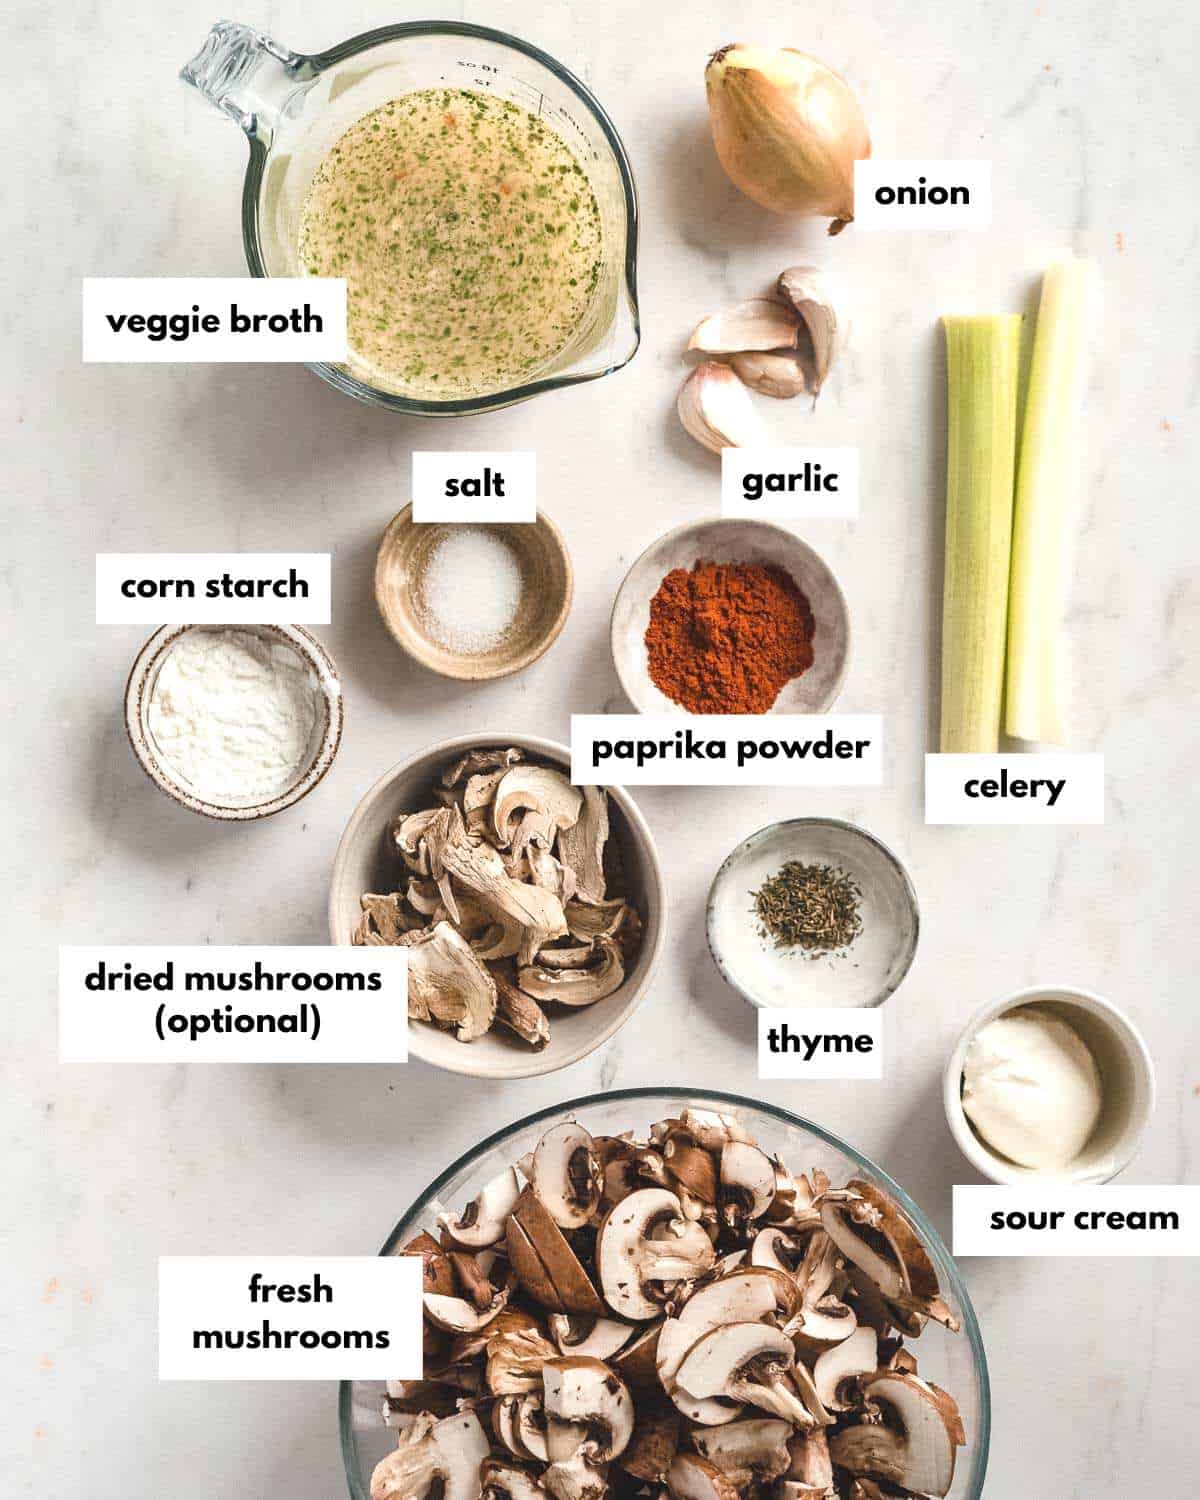 all ingredients needed to make ragout of mushrooms.